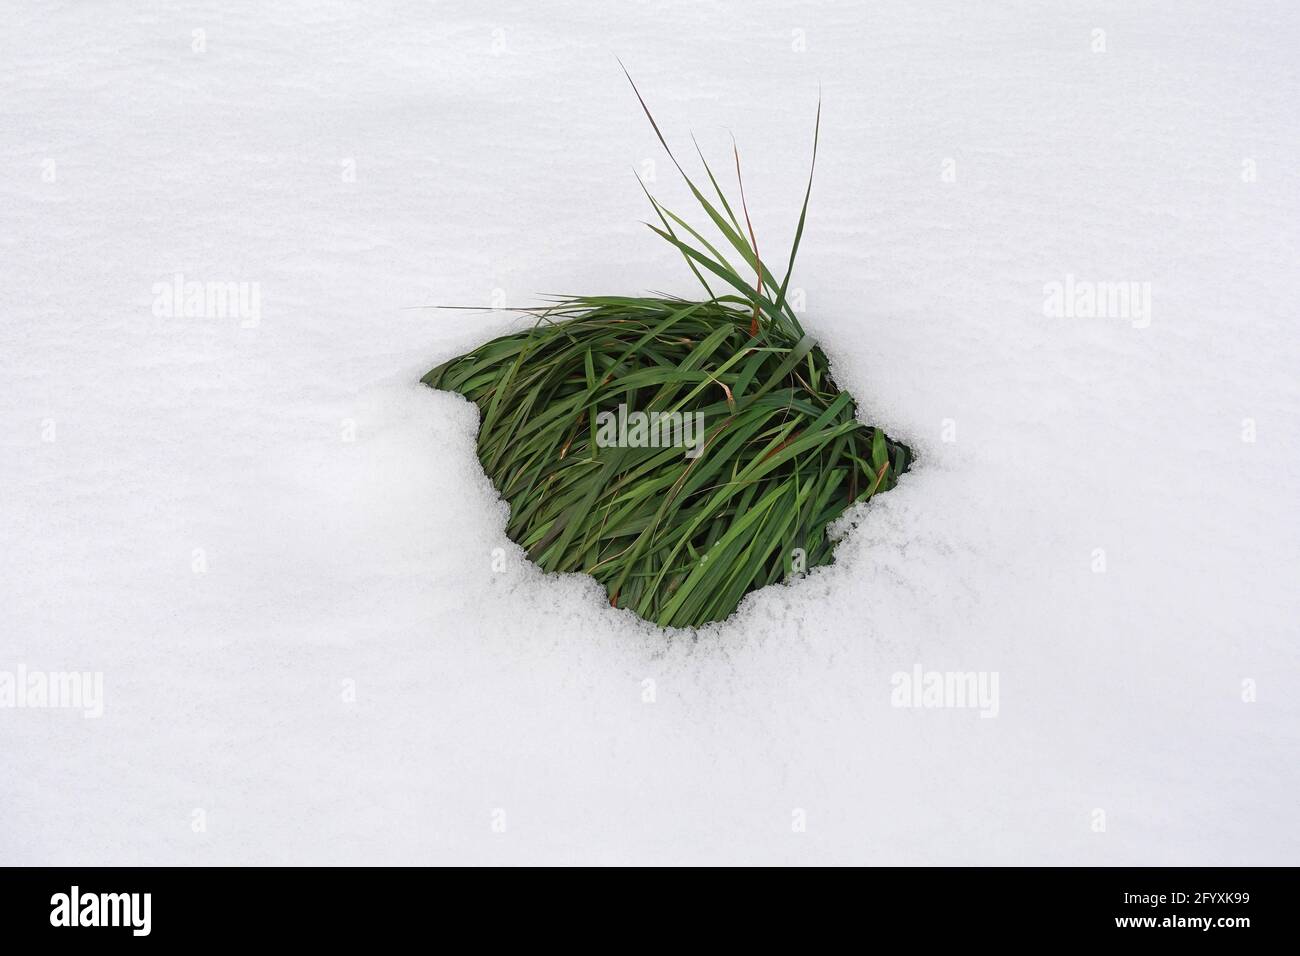 Grünes Gras unter geschmolzenem Schnee. Der Winter wird zum Frühling. Stockfoto